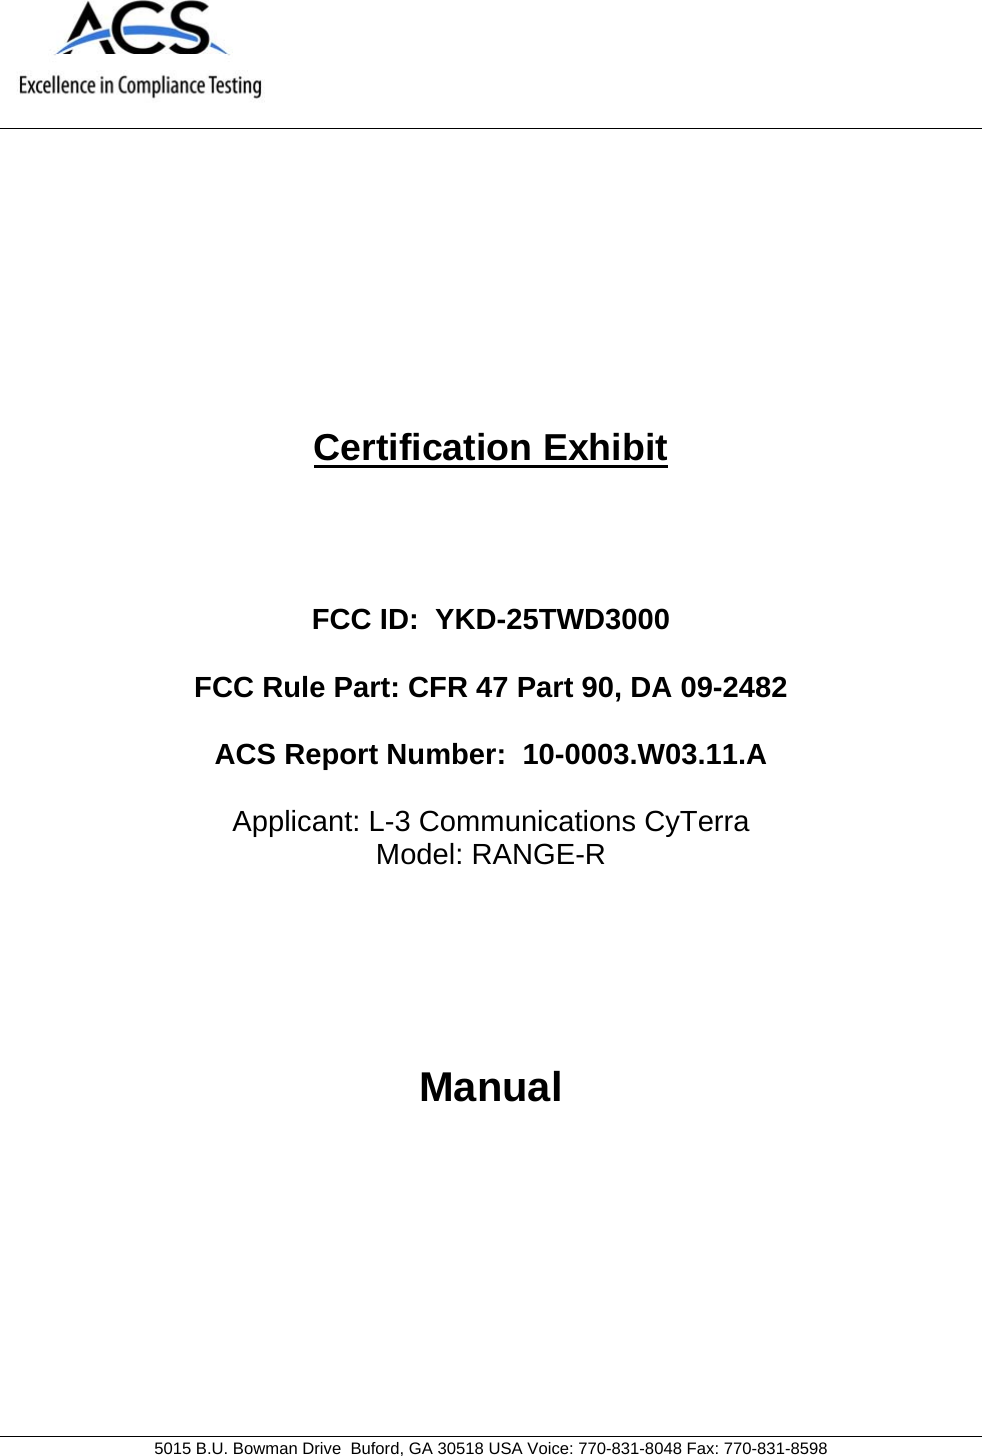     5015 B.U. Bowman Drive  Buford, GA 30518 USA Voice: 770-831-8048 Fax: 770-831-8598   Certification Exhibit     FCC ID:  YKD-25TWD3000  FCC Rule Part: CFR 47 Part 90, DA 09-2482  ACS Report Number:  10-0003.W03.11.A   Applicant: L-3 Communications CyTerra Model: RANGE-R     Manual  